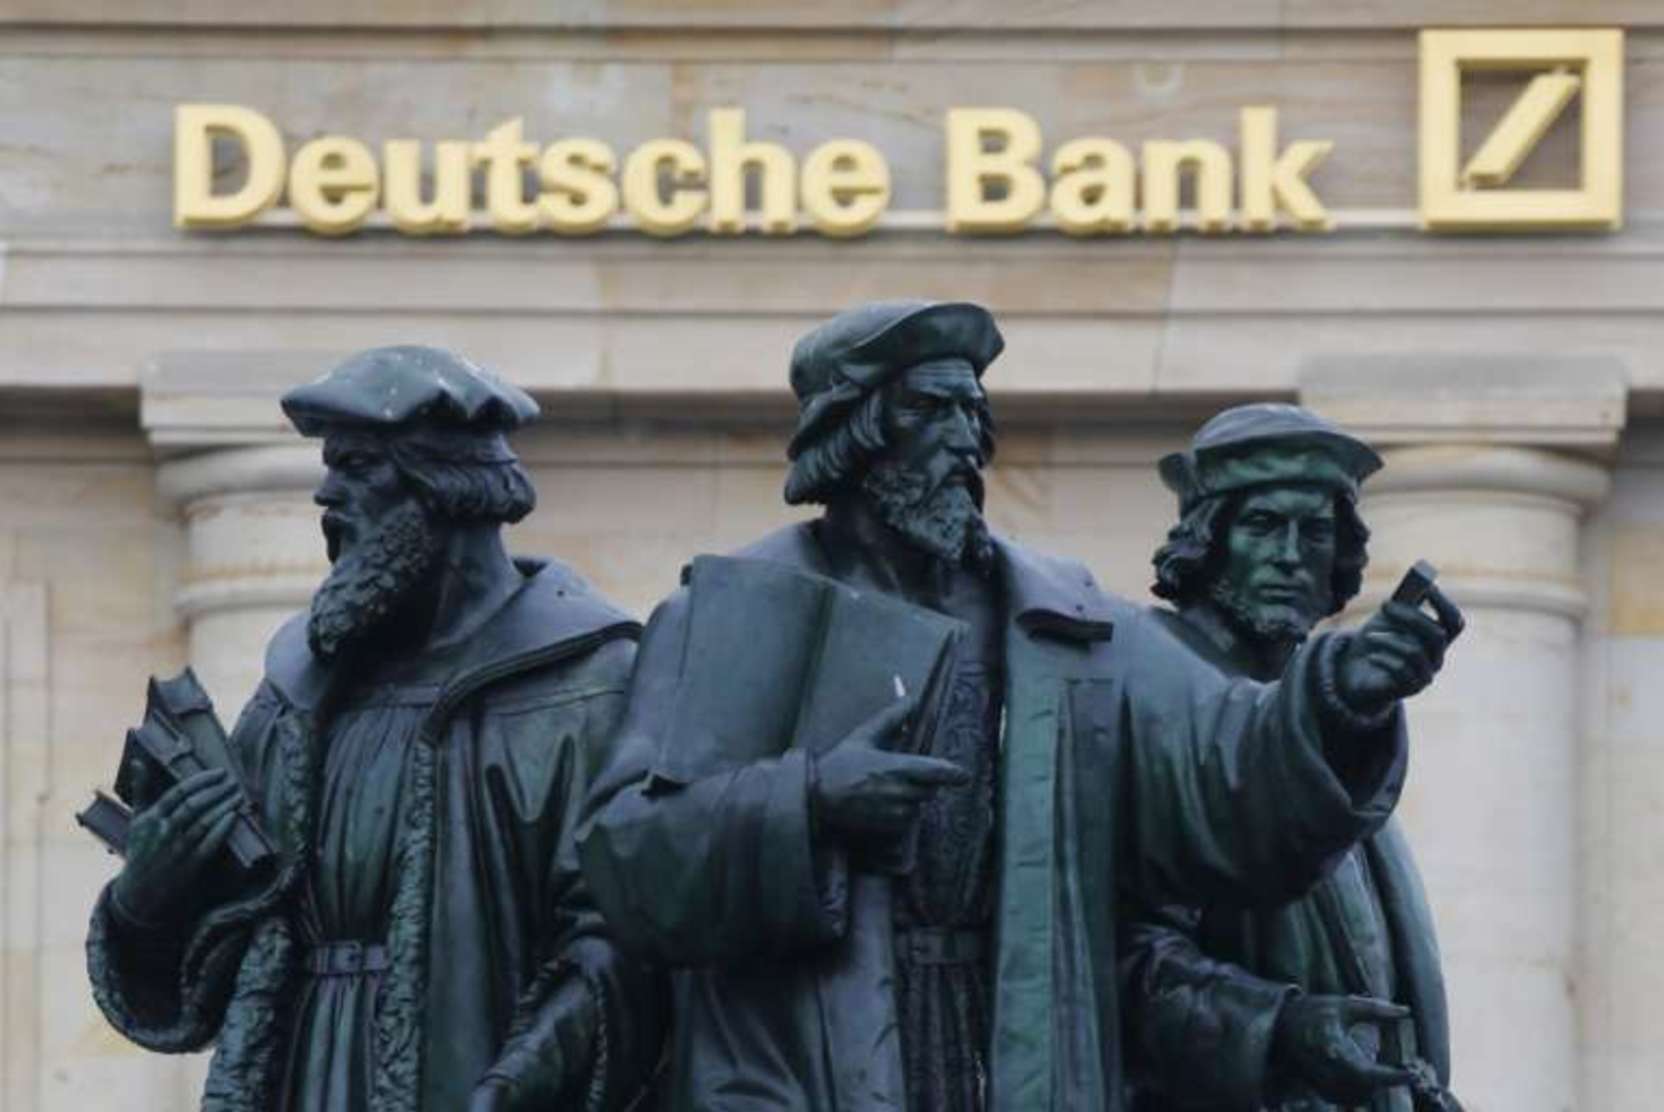  deutsche bank    